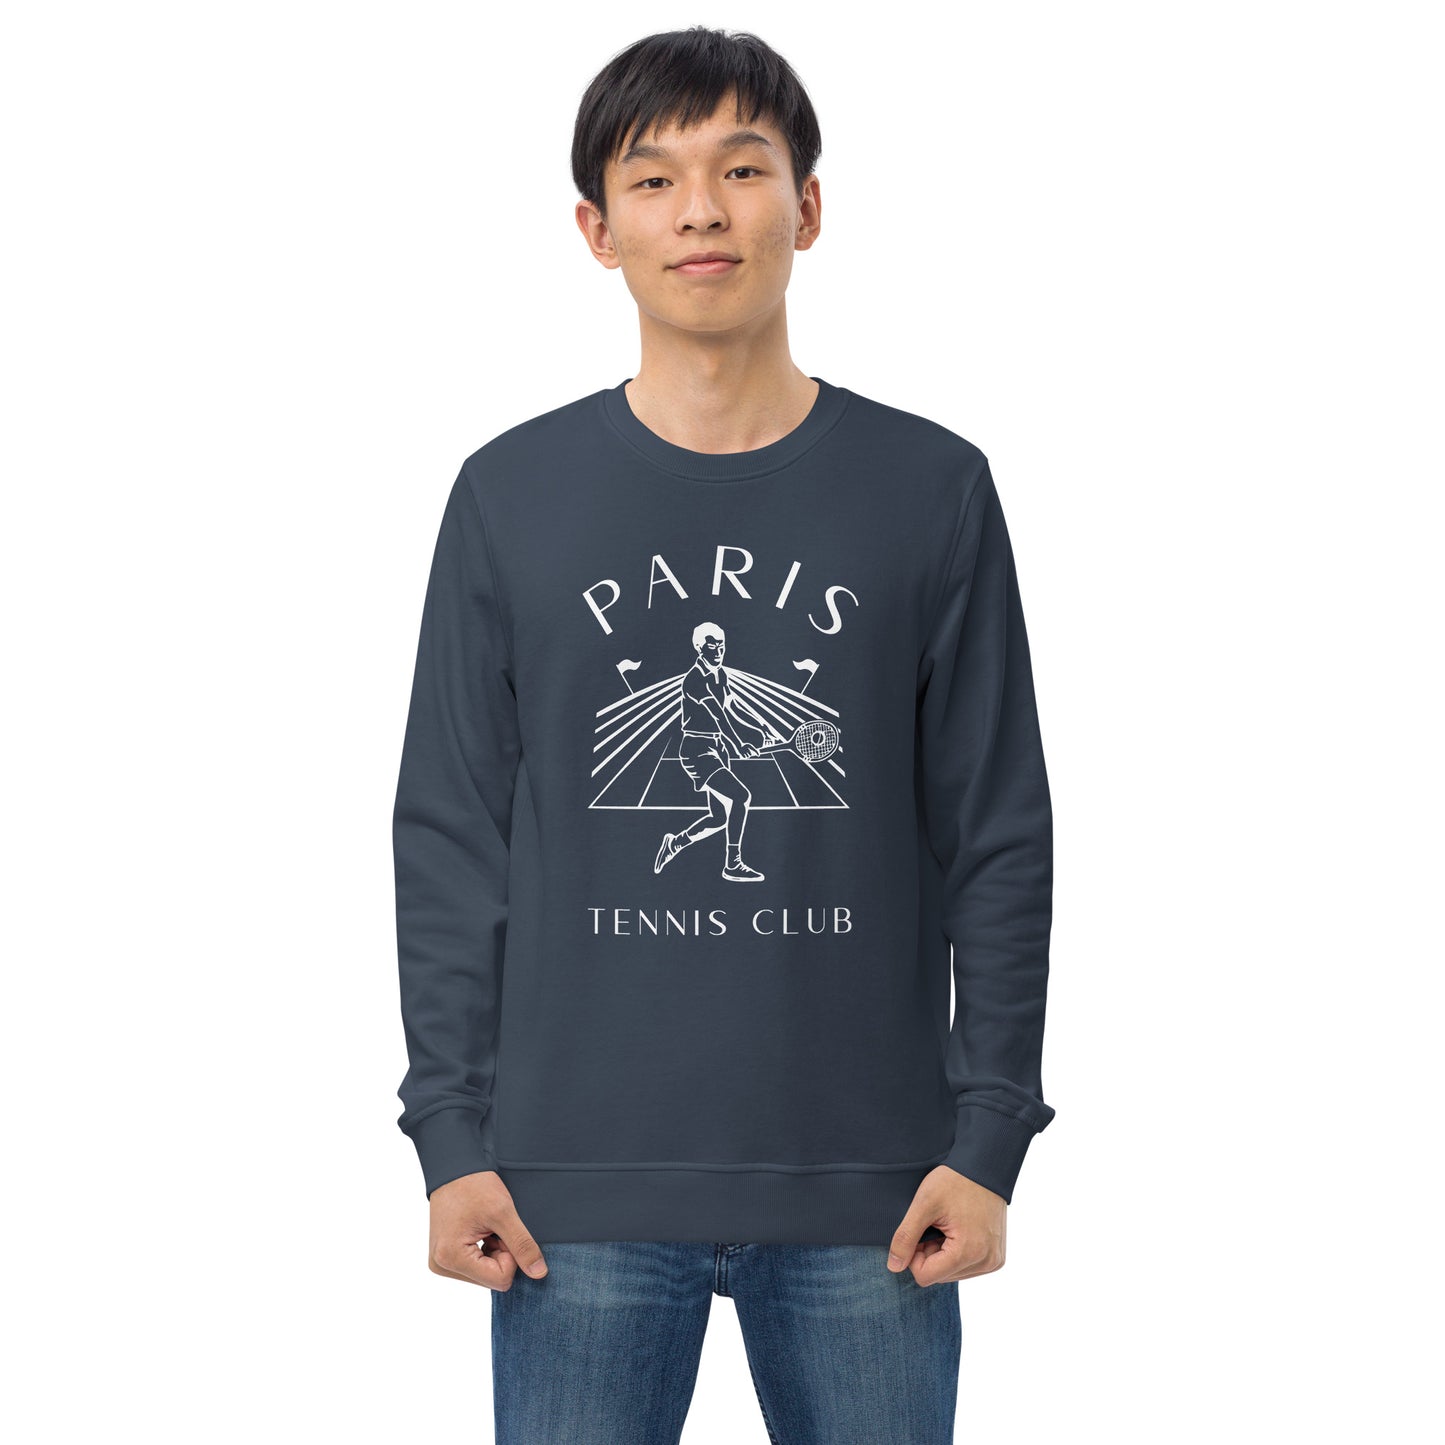 male wearing organic navy sweater